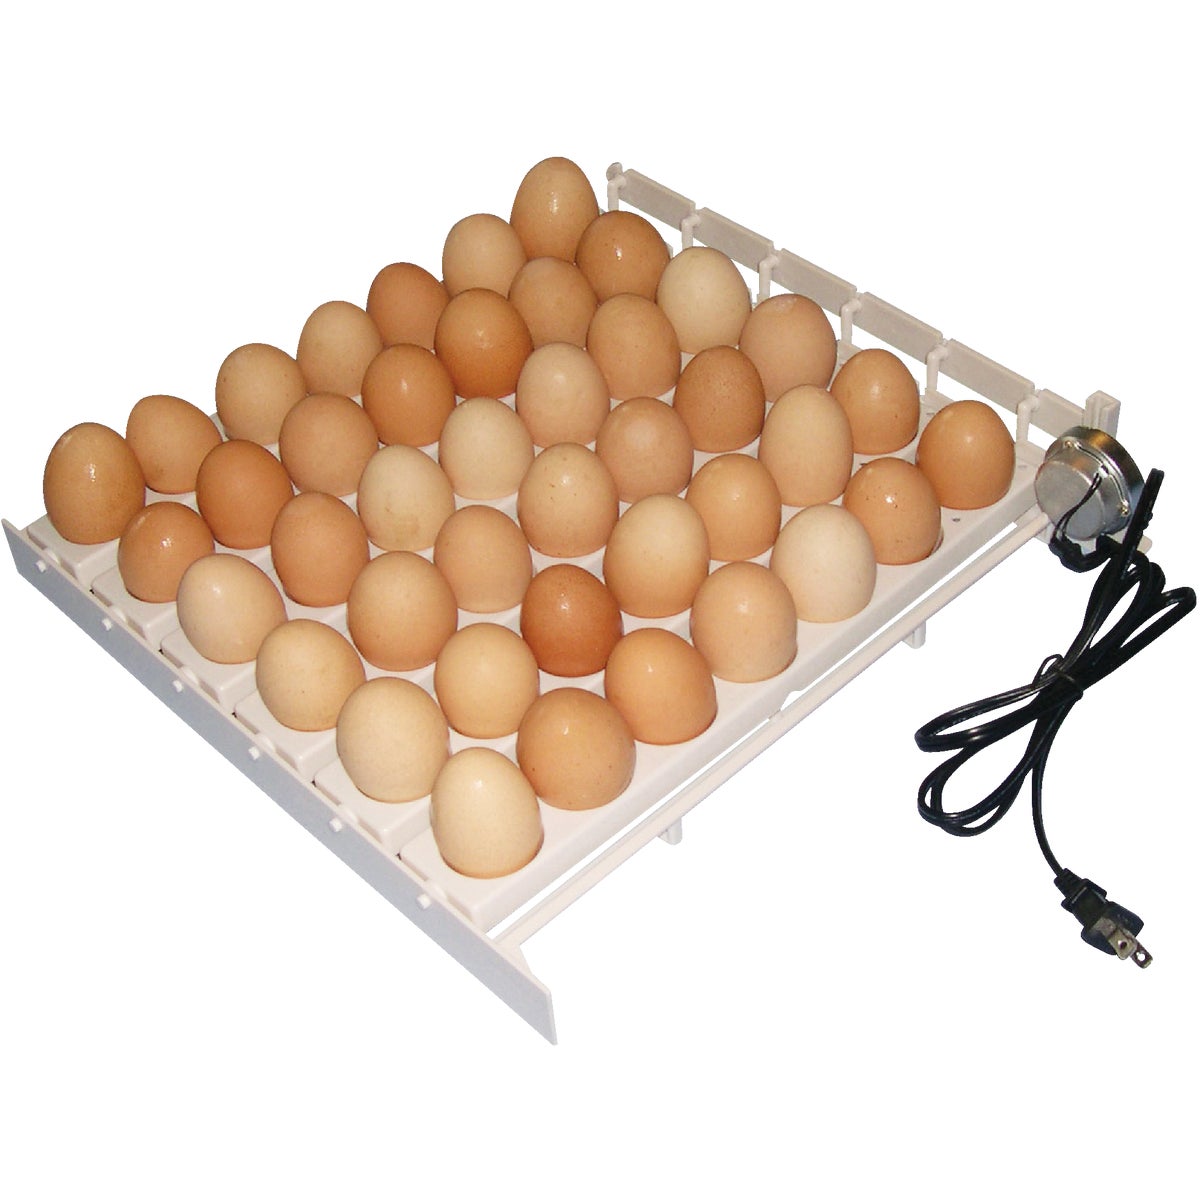 Item 702633, Automatic egg turner.